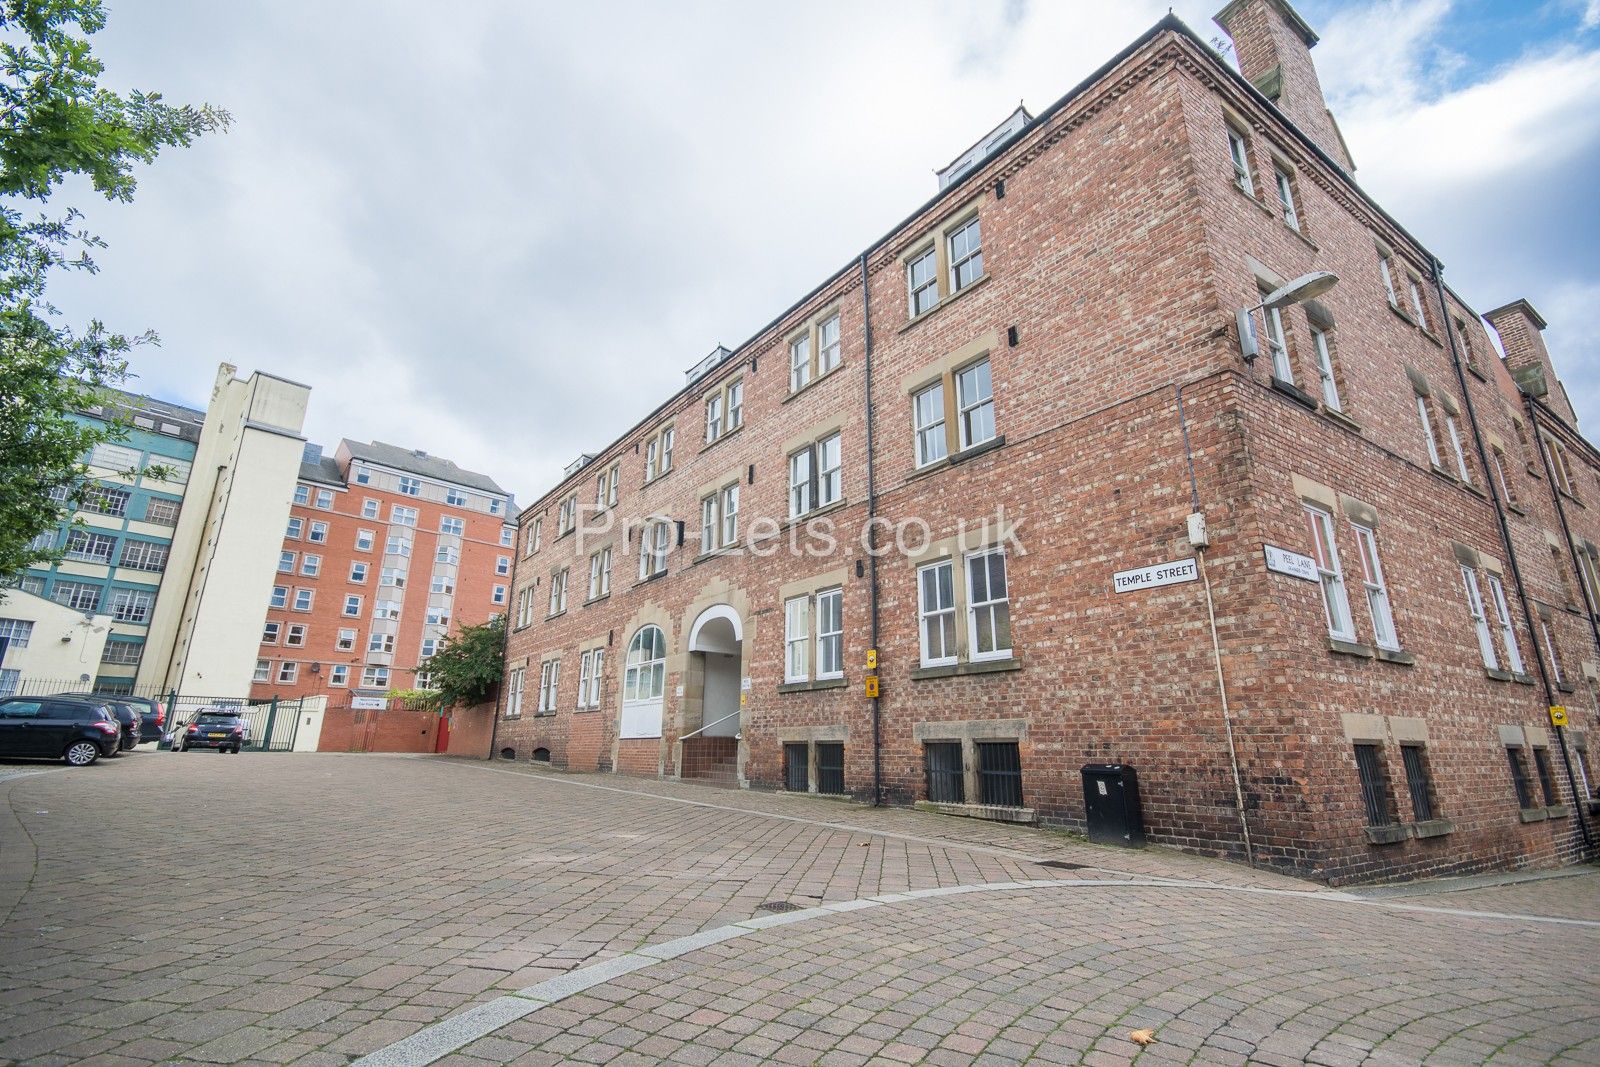 2 Bedroom Apartment To Rent Temple Street Newcastle Upon Tyne Ne1 4bp